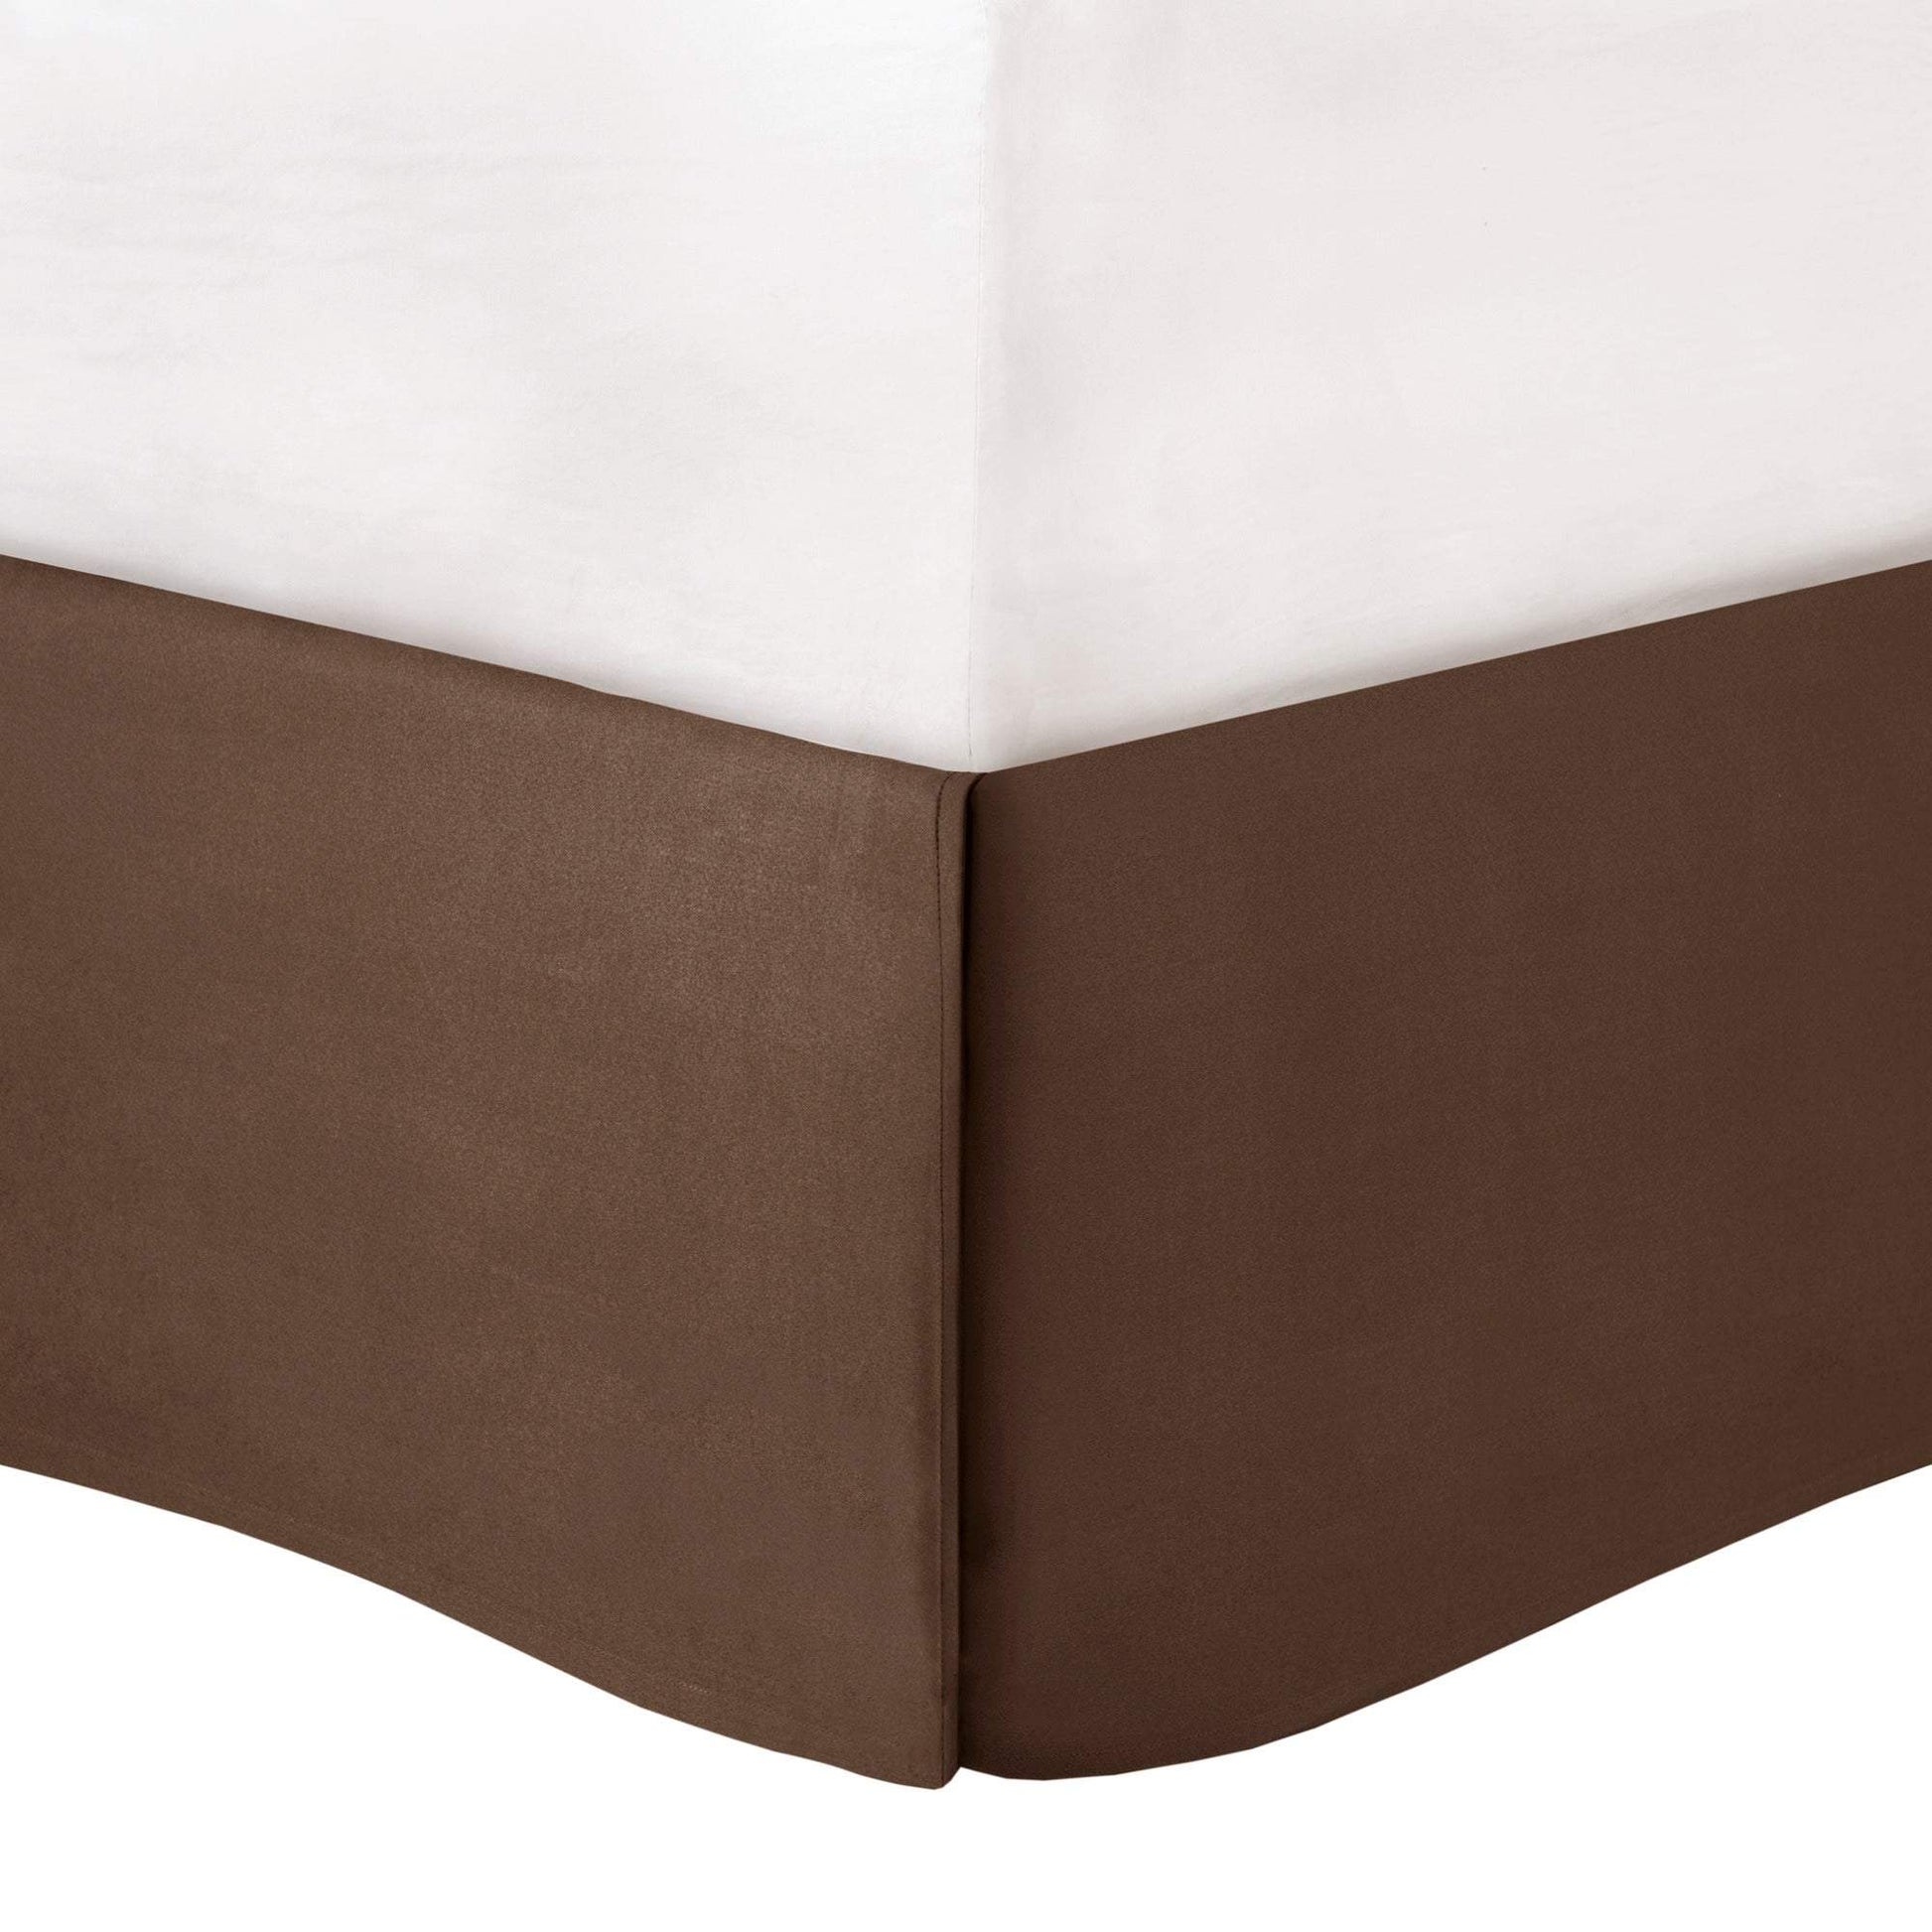 Taos Spice 7-Piece Comforter Set Comforter Sets By Olliix/JLA HOME (E & E Co., Ltd)